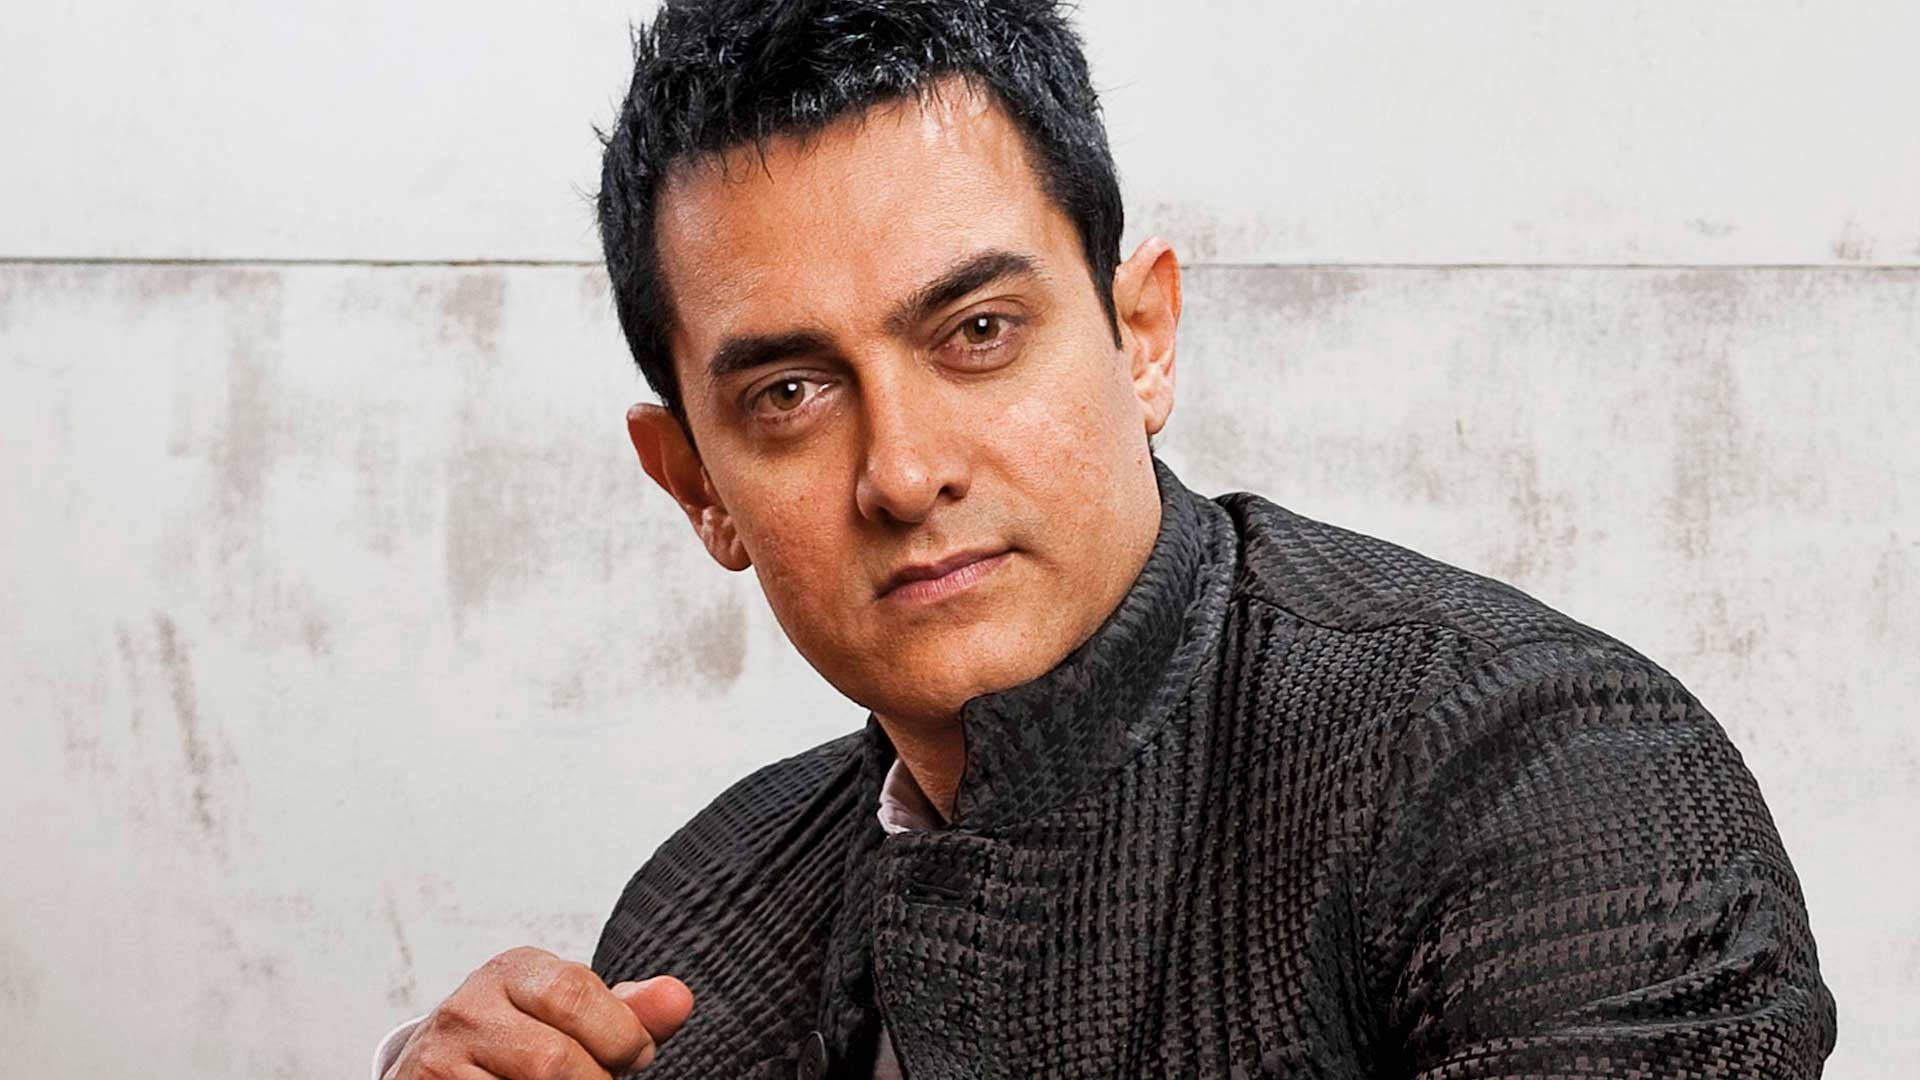 Free Aamir Khan Wallpaper Downloads, [100+] Aamir Khan Wallpapers for FREE  